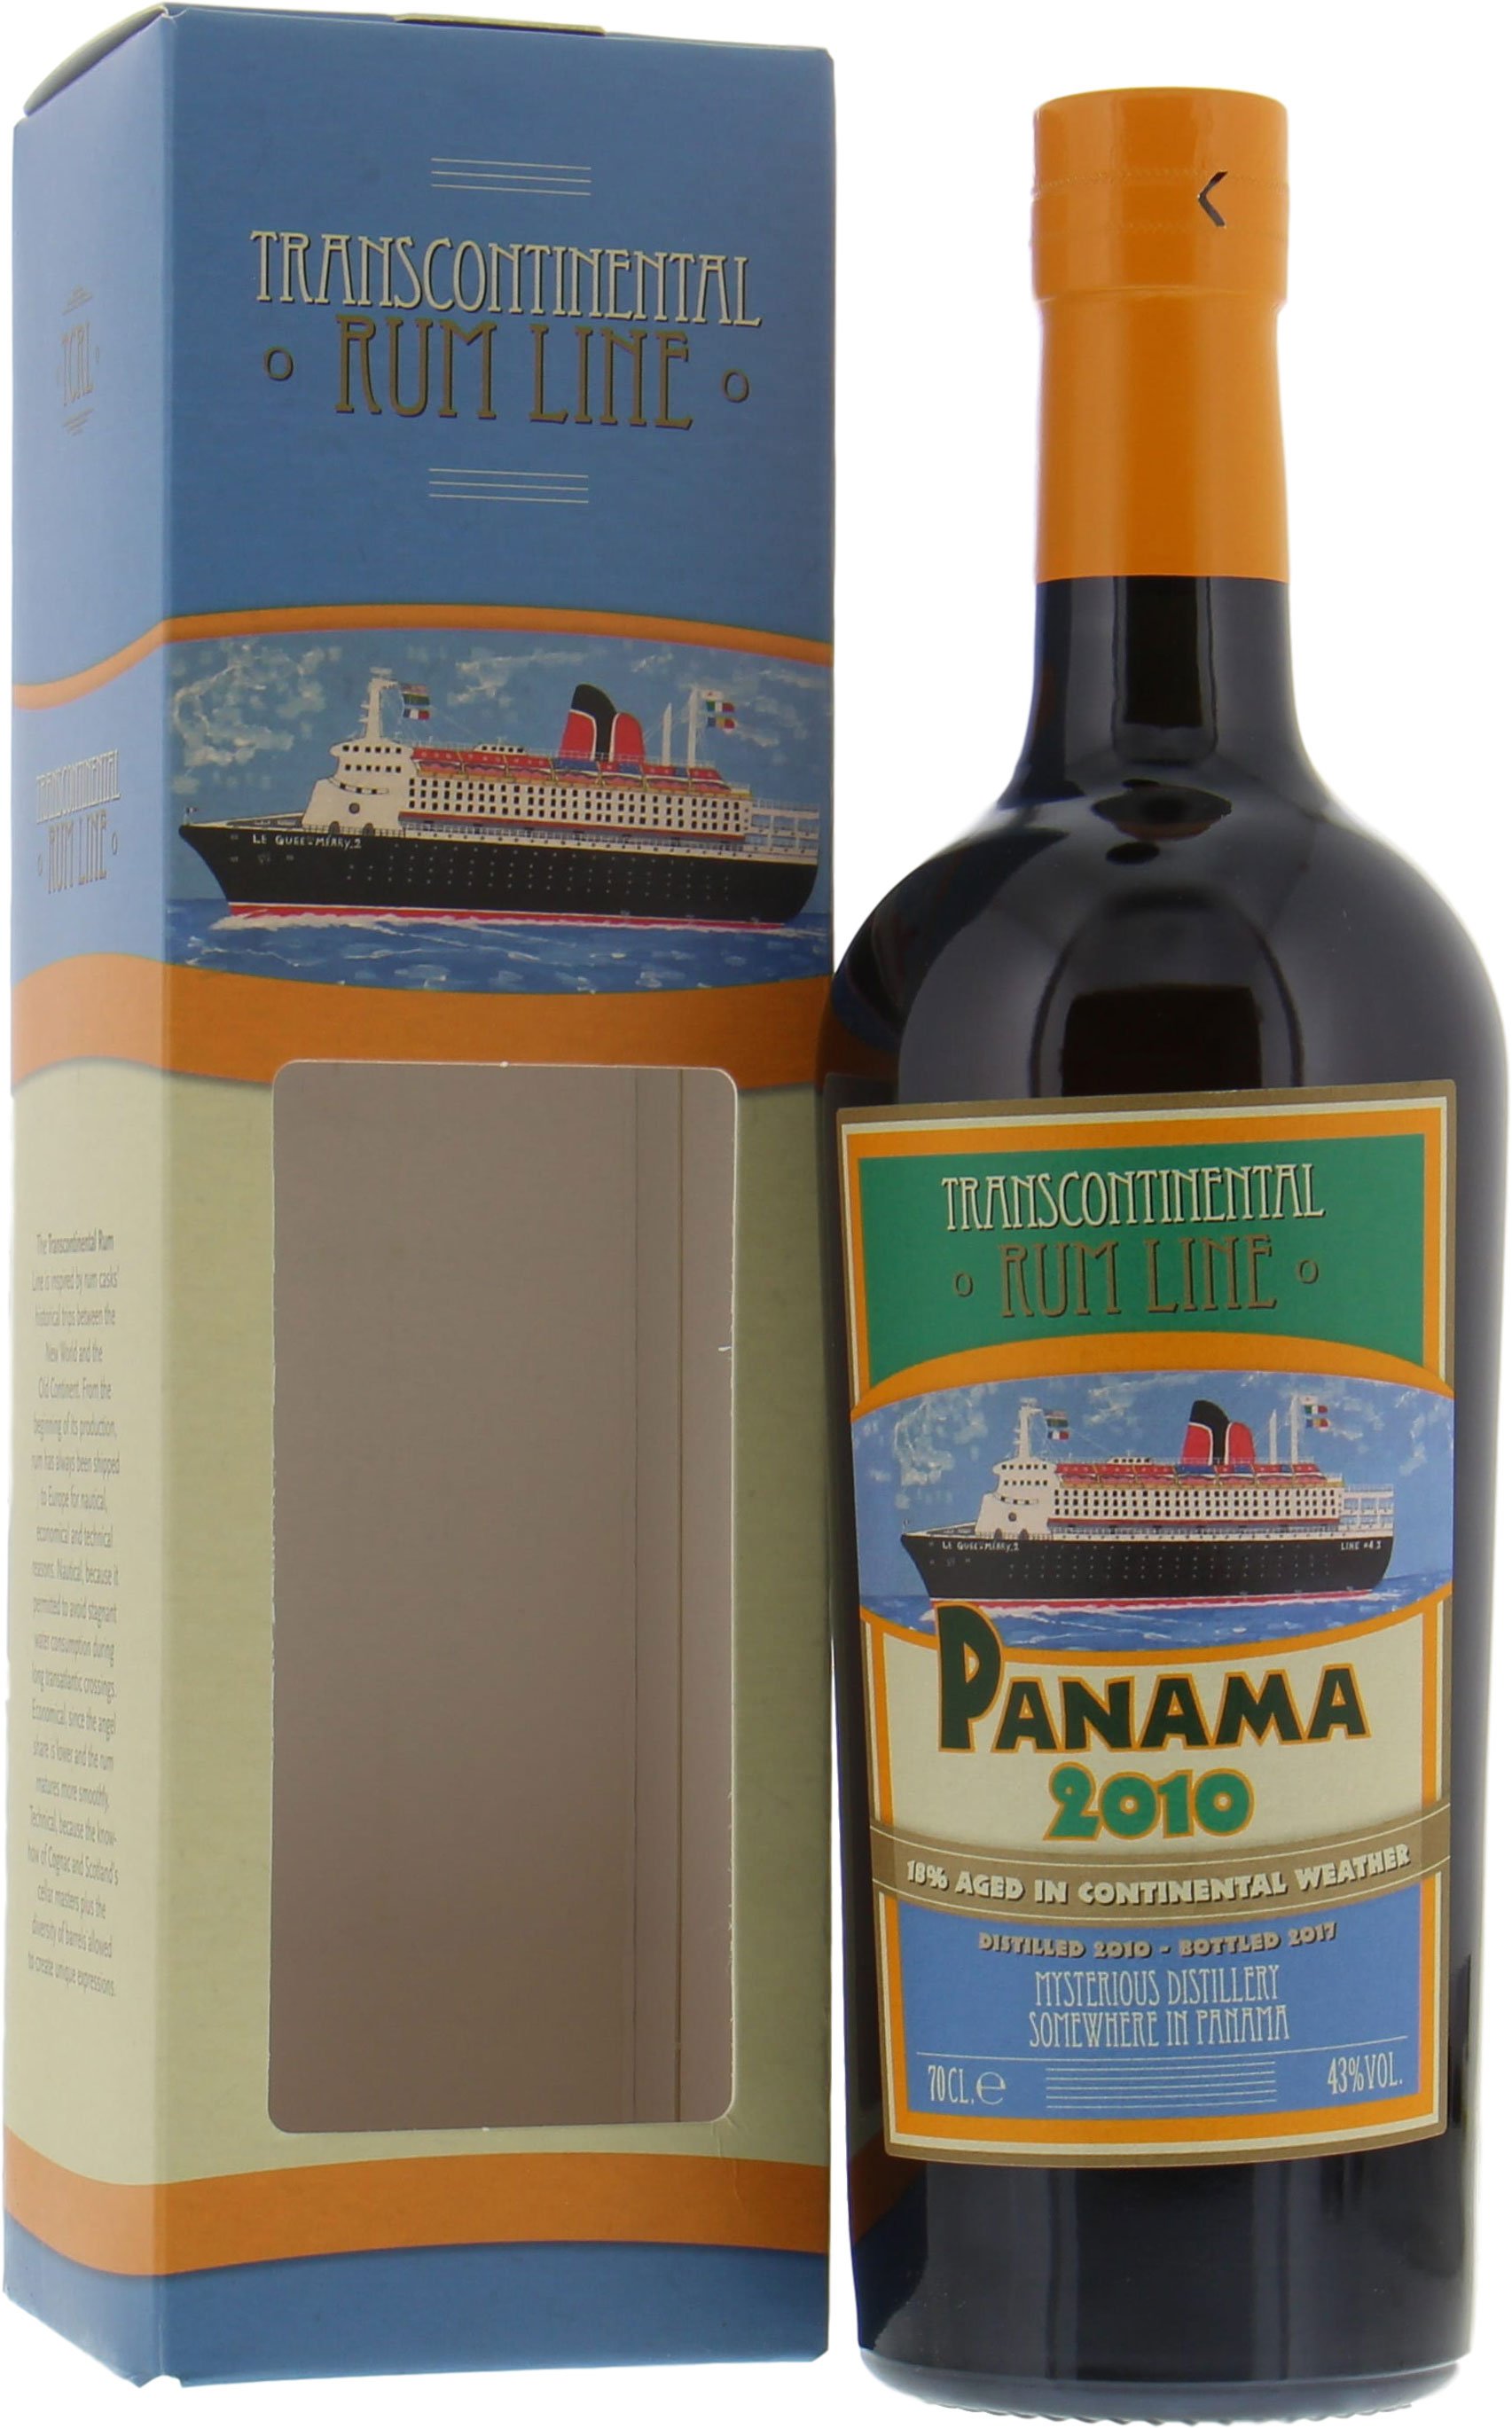 Transcontinental Rum Line - Panama Mysterious Distillery Limited Edition Batch #3 43% 2010 In Original Carton